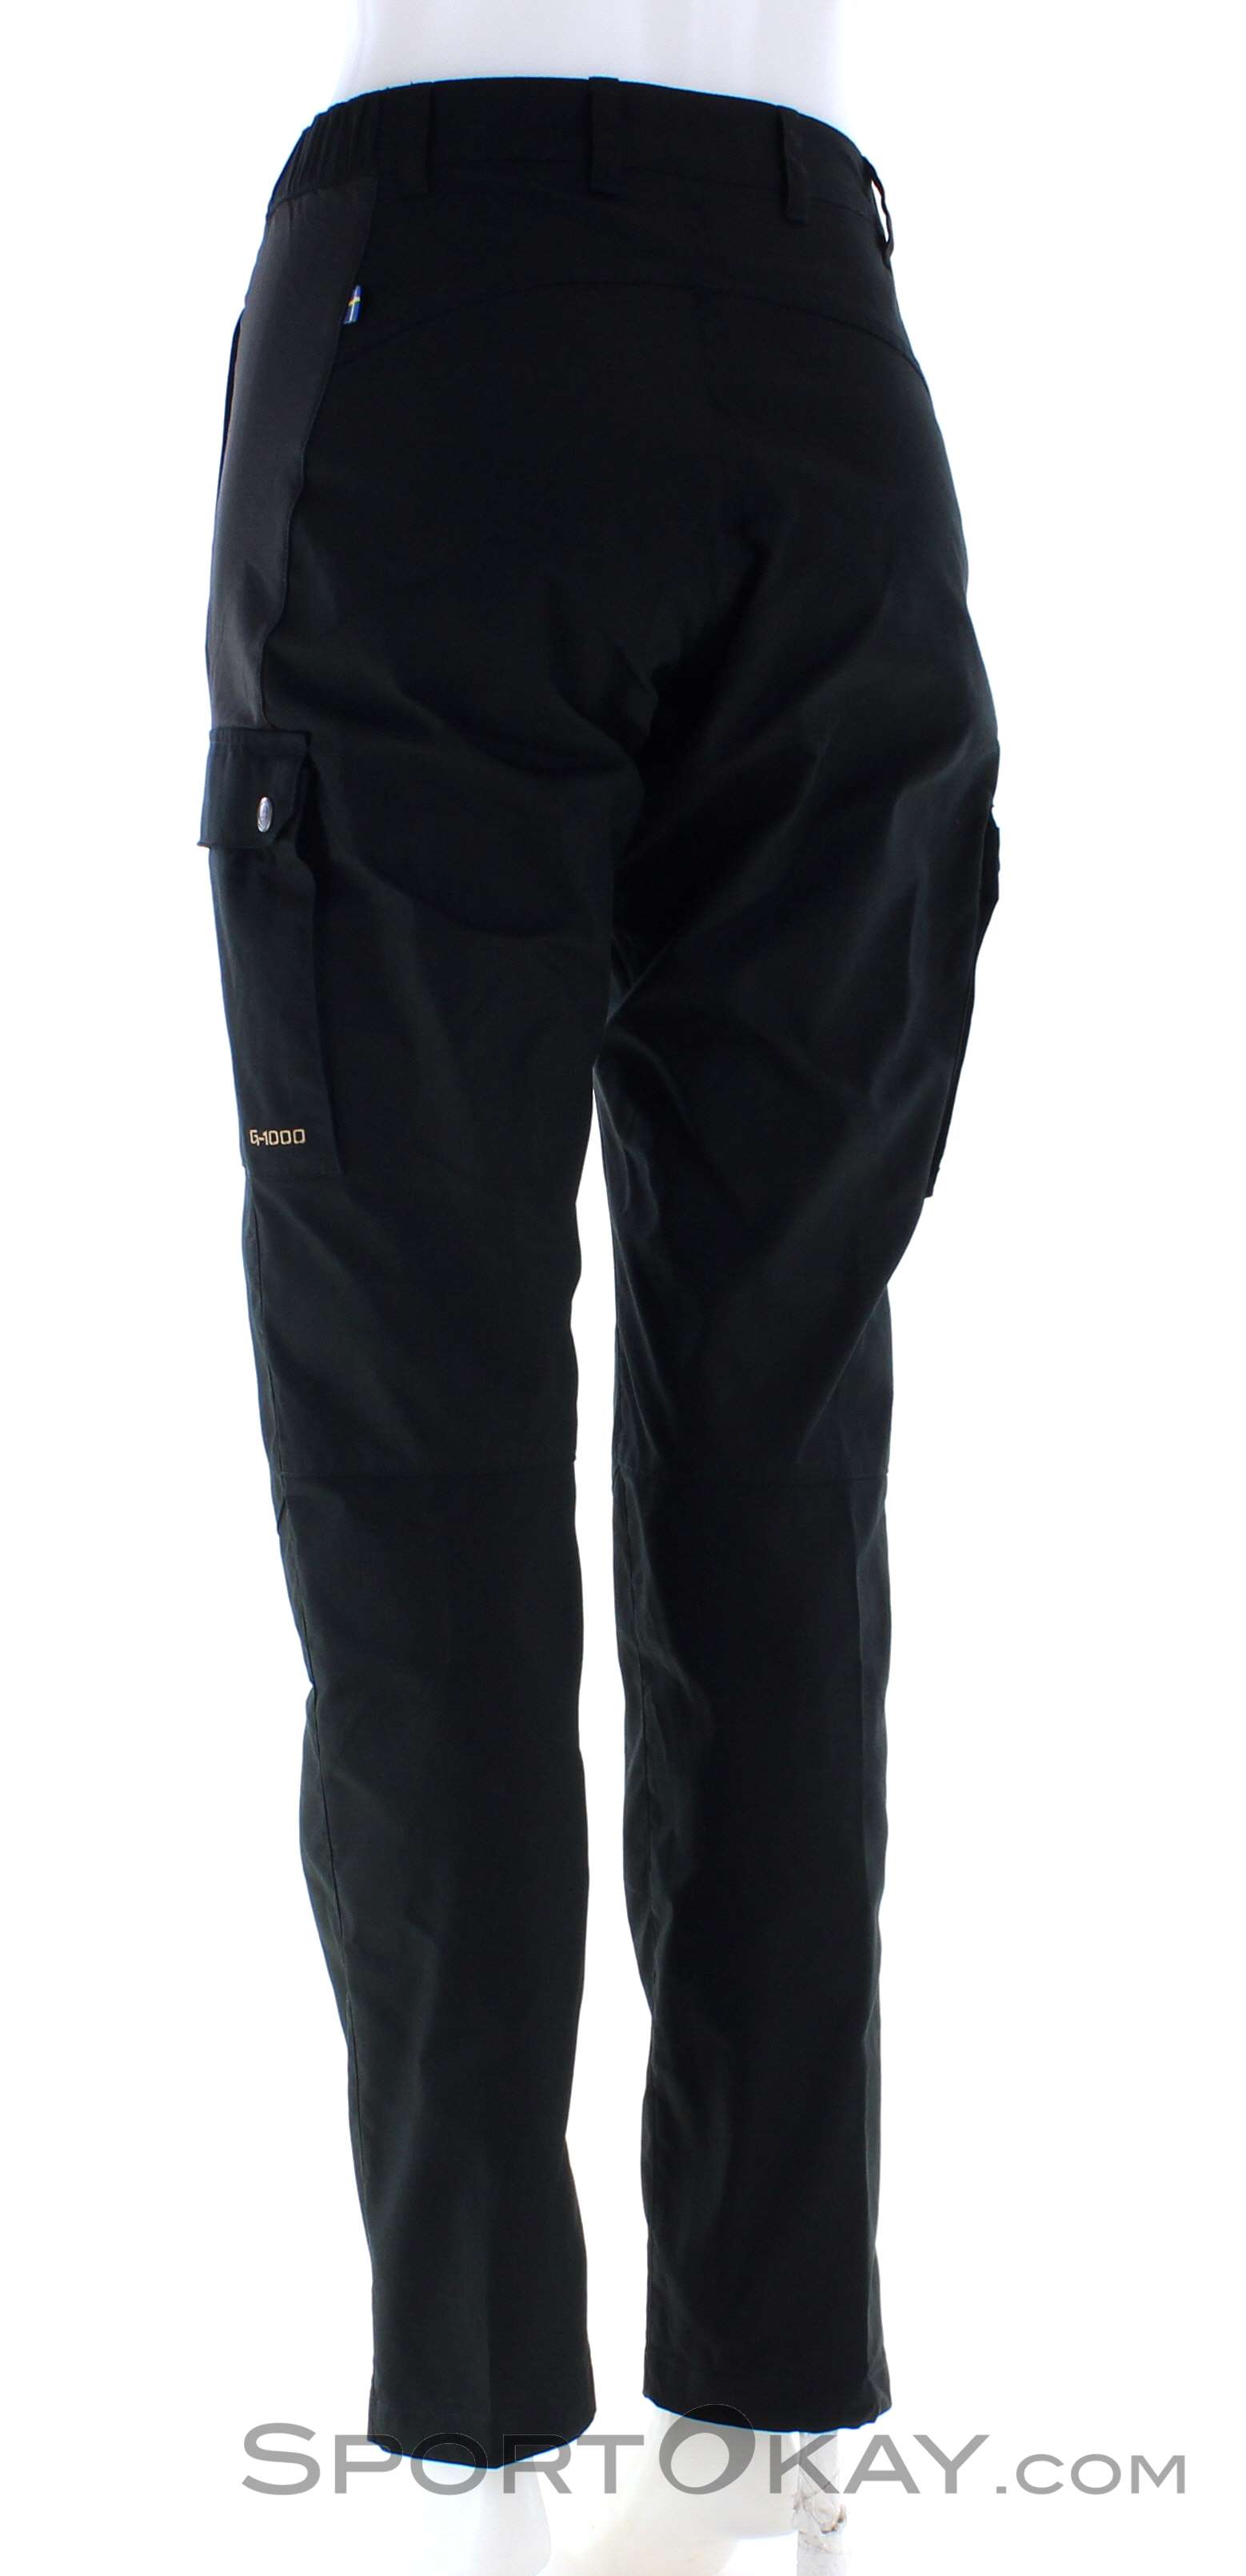 HAGLOFS Climatic Pants Black Women's Outdoor Trousers Size 36 | eBay